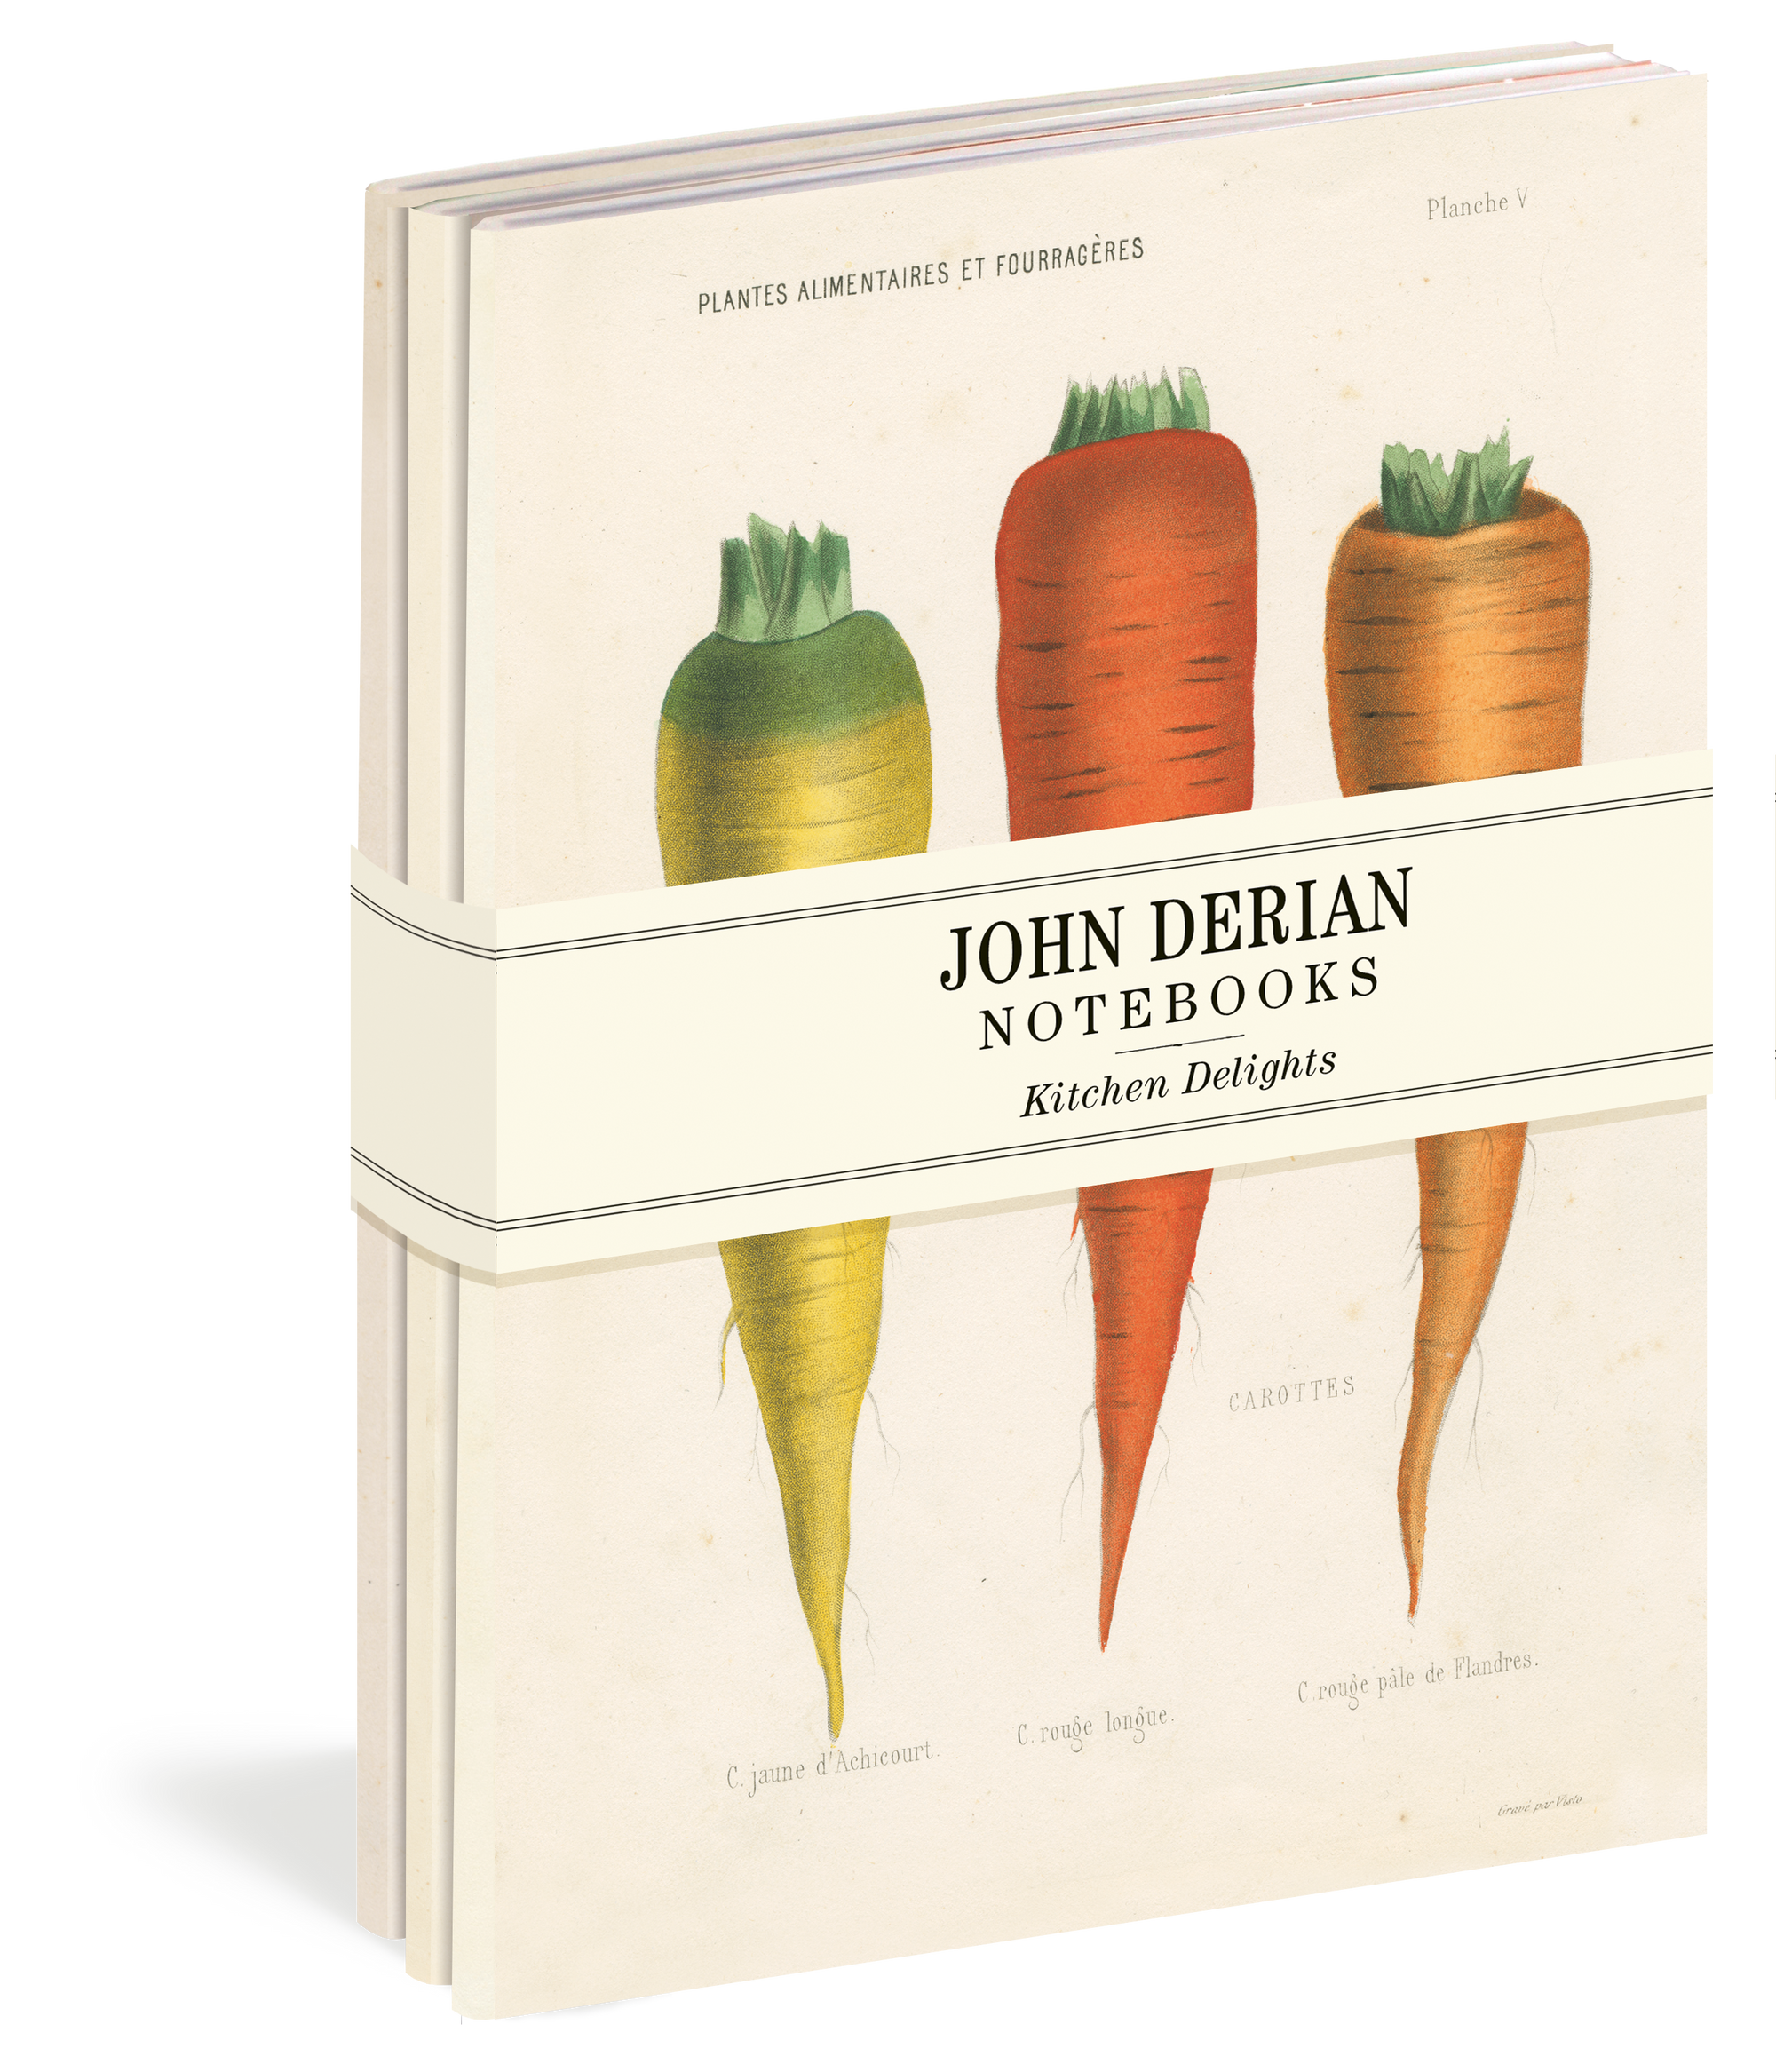 John Derian Kitchen Delights Notebooks